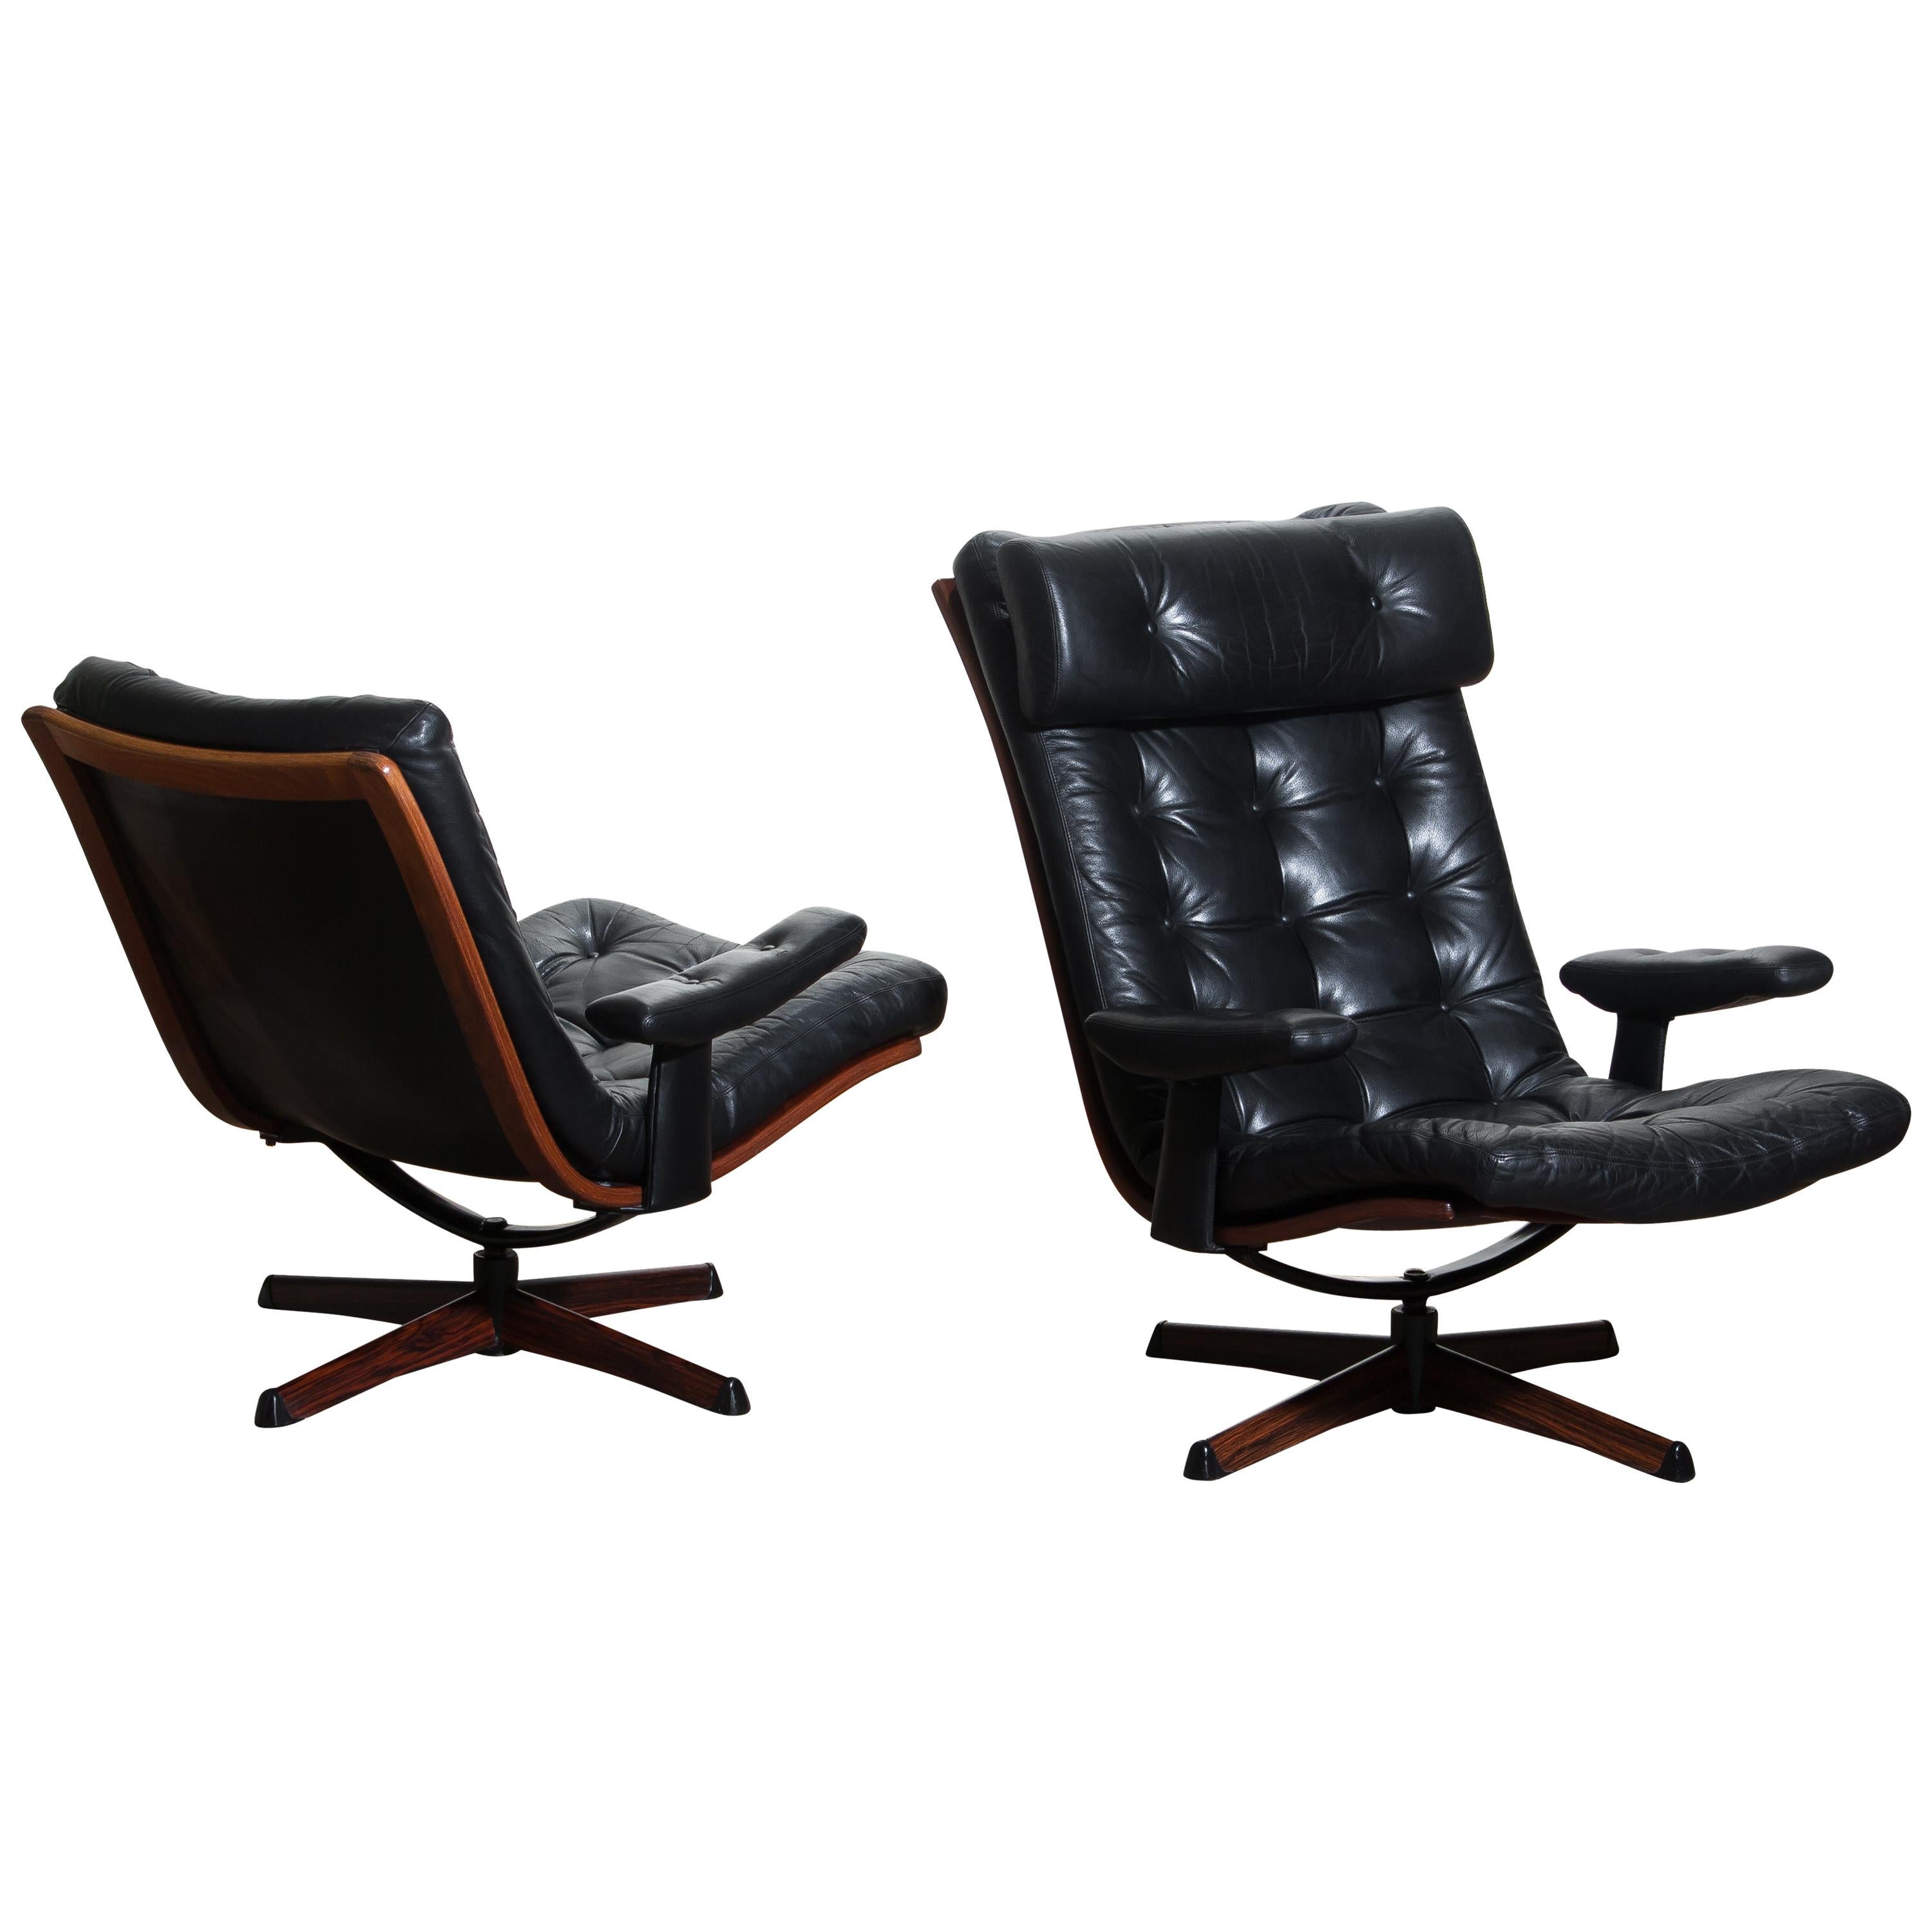 Late 20th Century 1970s Matching Pair of Black Leather Swivel Chairs by Göte Möbler Nässjö, Sweden